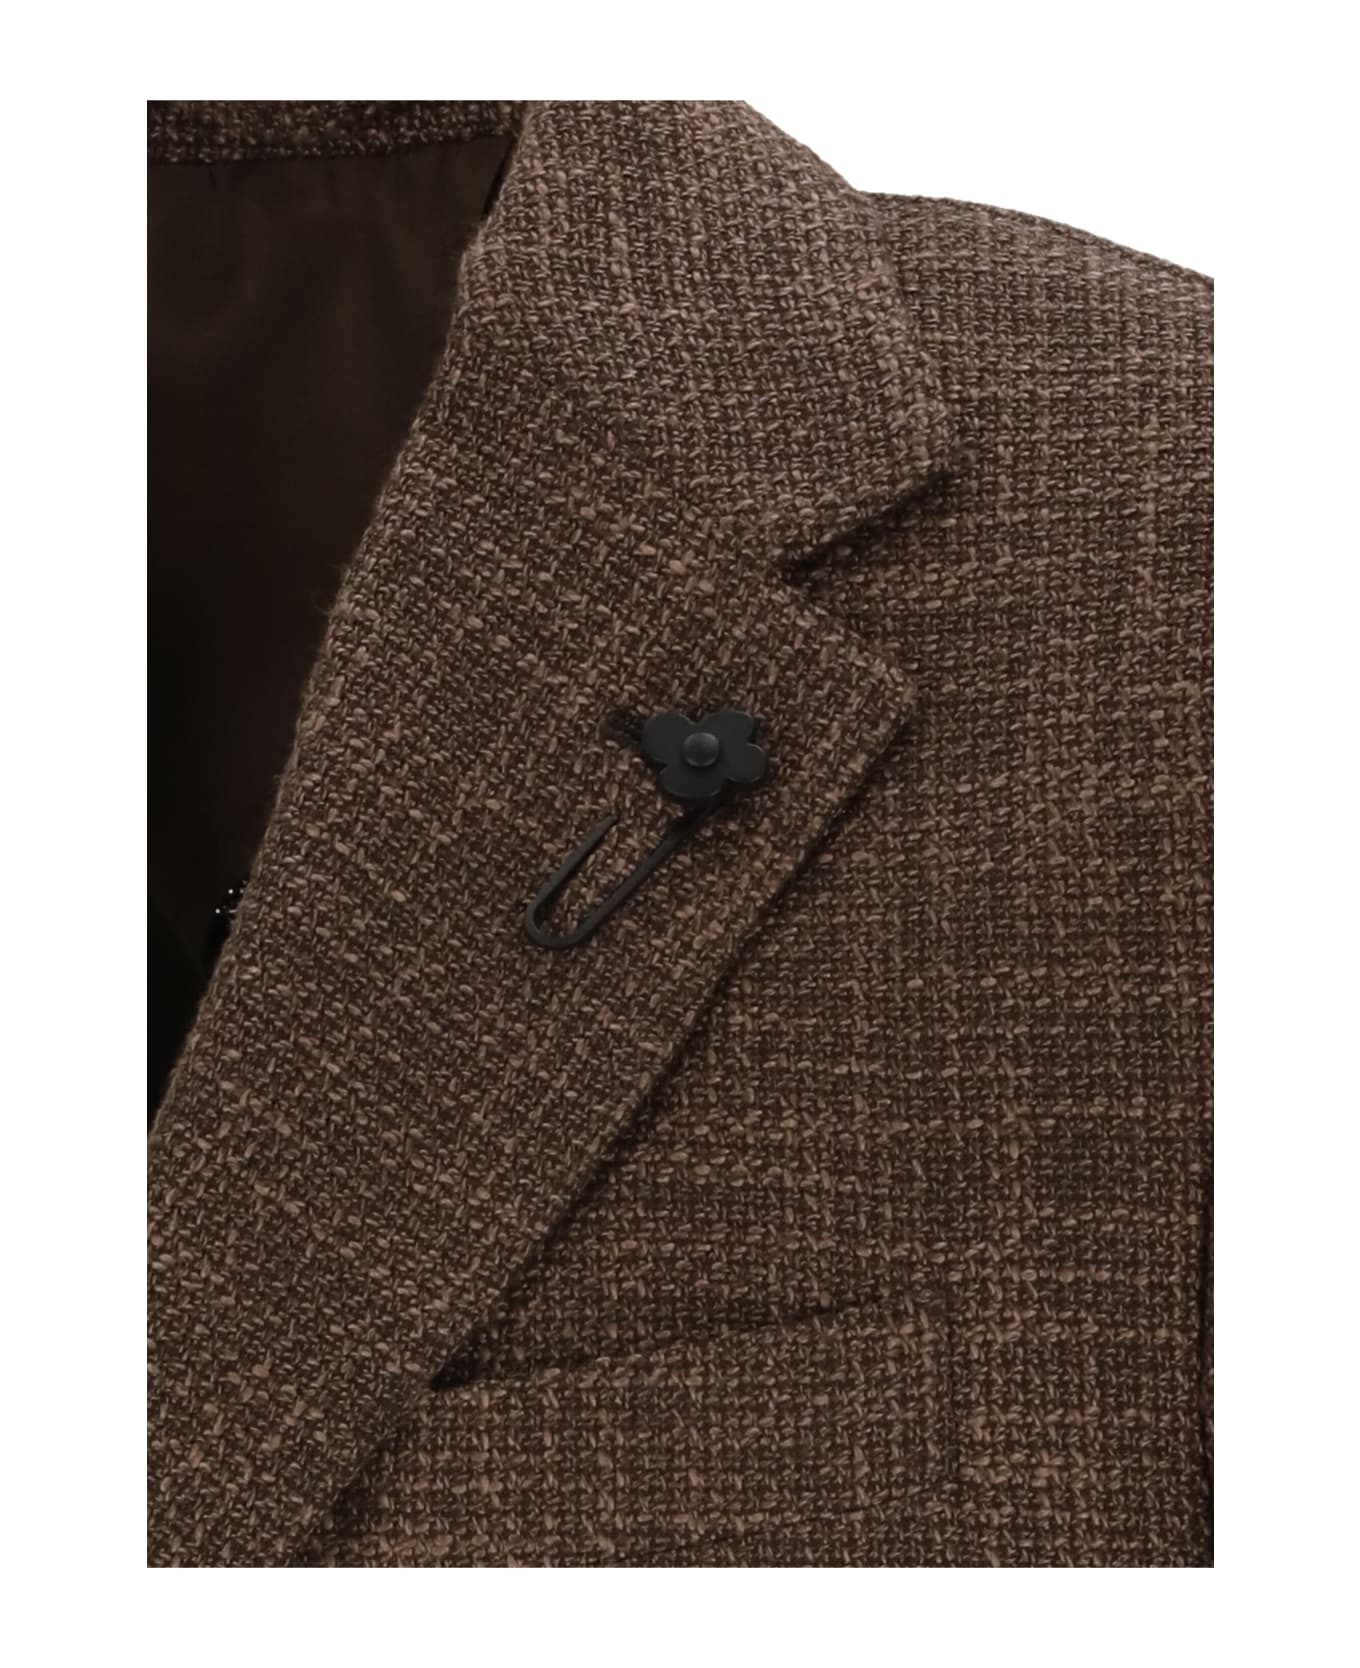 Lardini Wool And Cotton Jacket - Brown